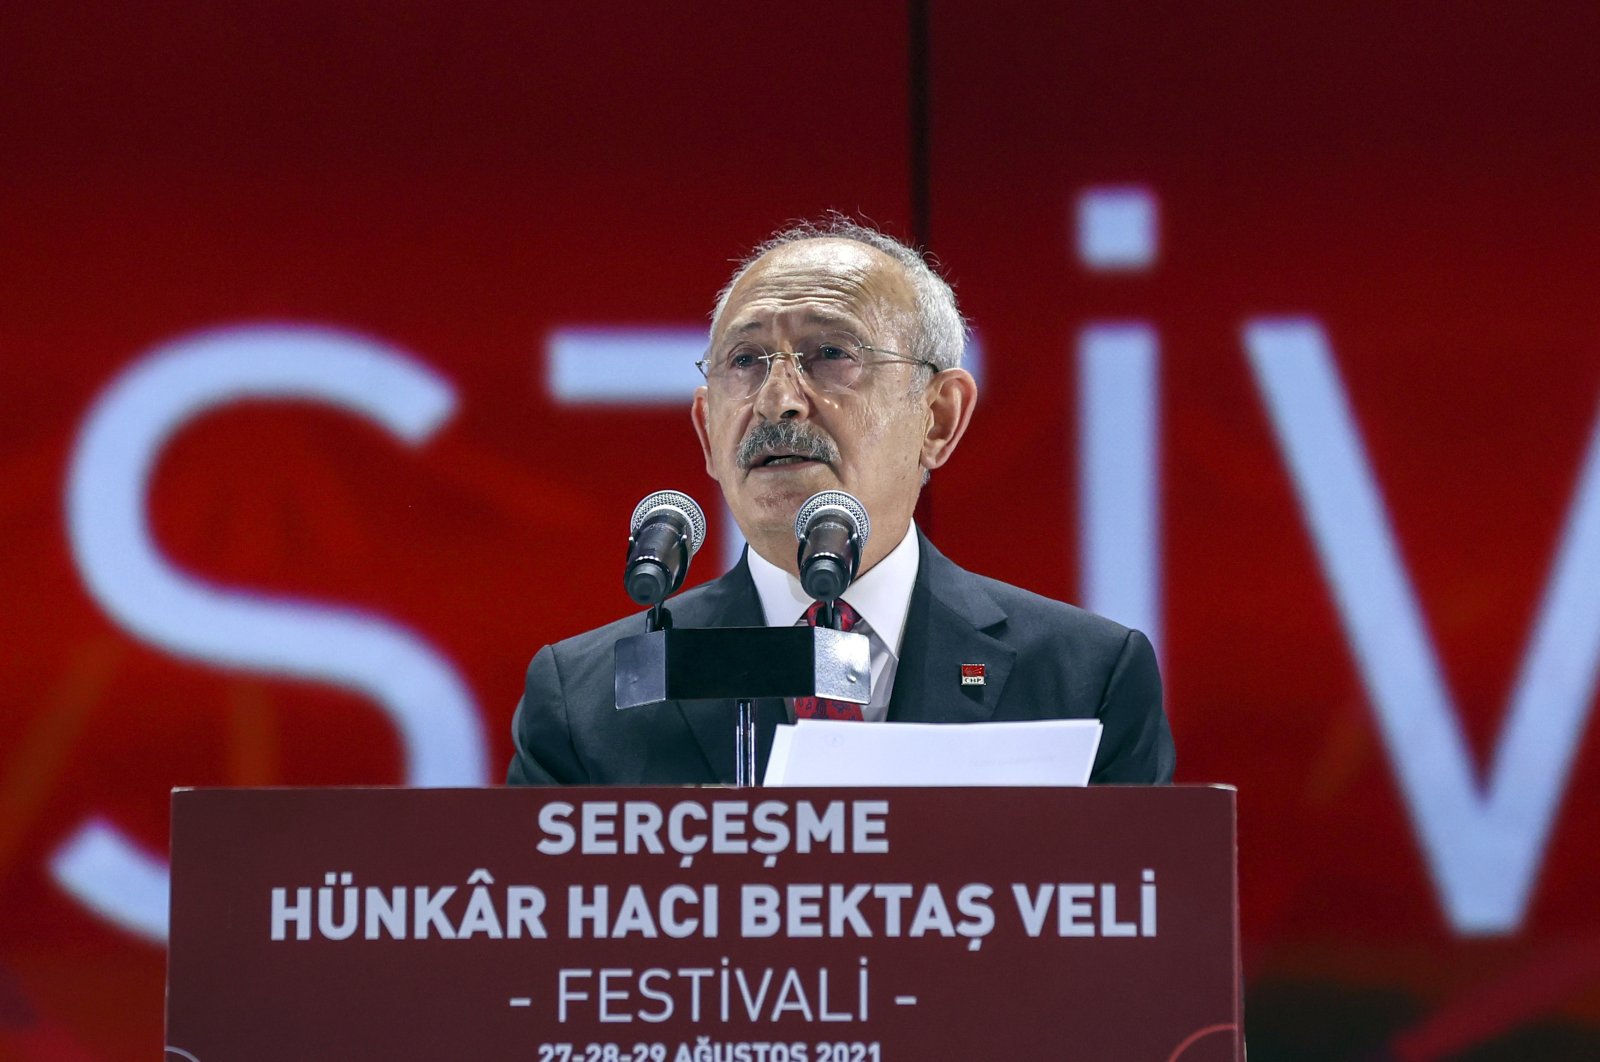 Nation Alliance may have multiple presidential candidates: Kılıçdaroğlu ...